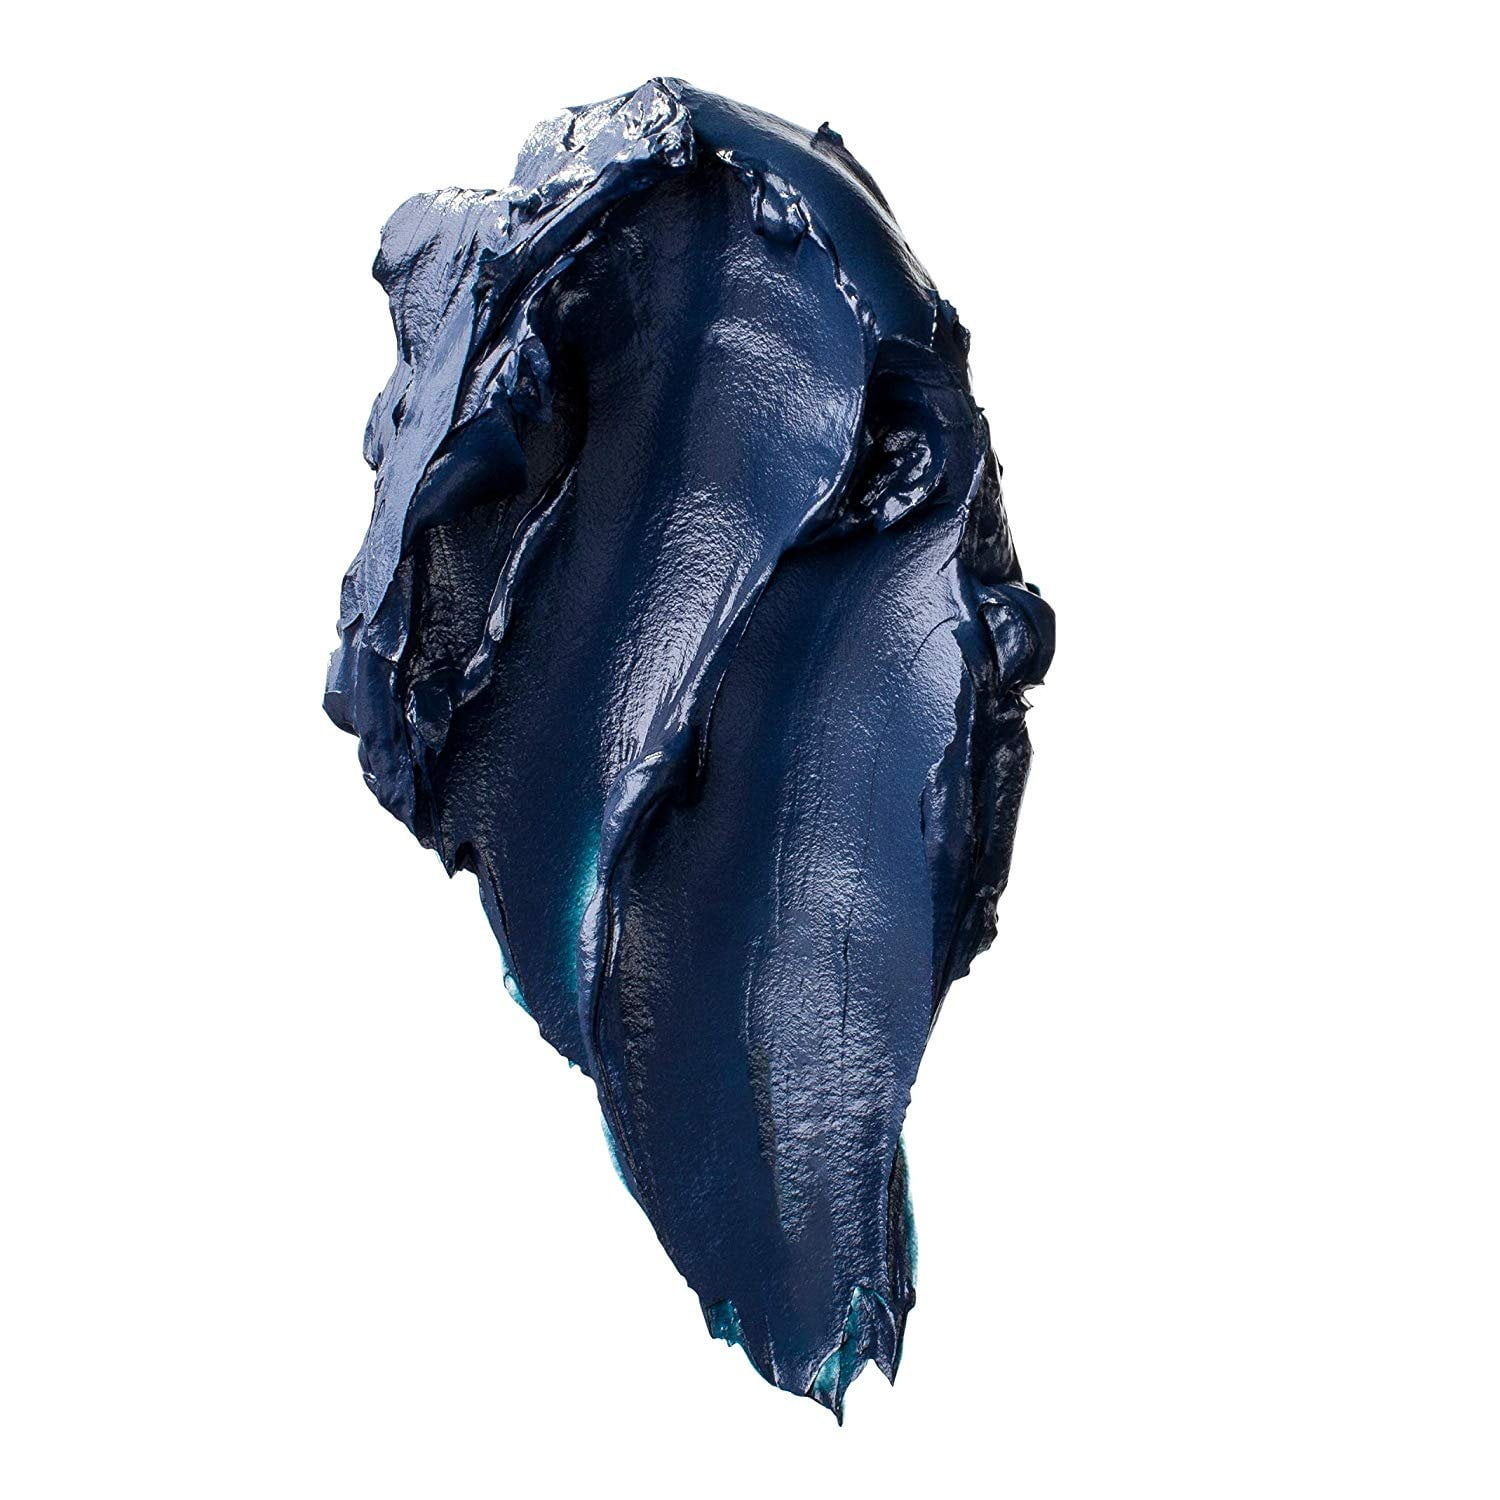 navy blue shoe polish walmart